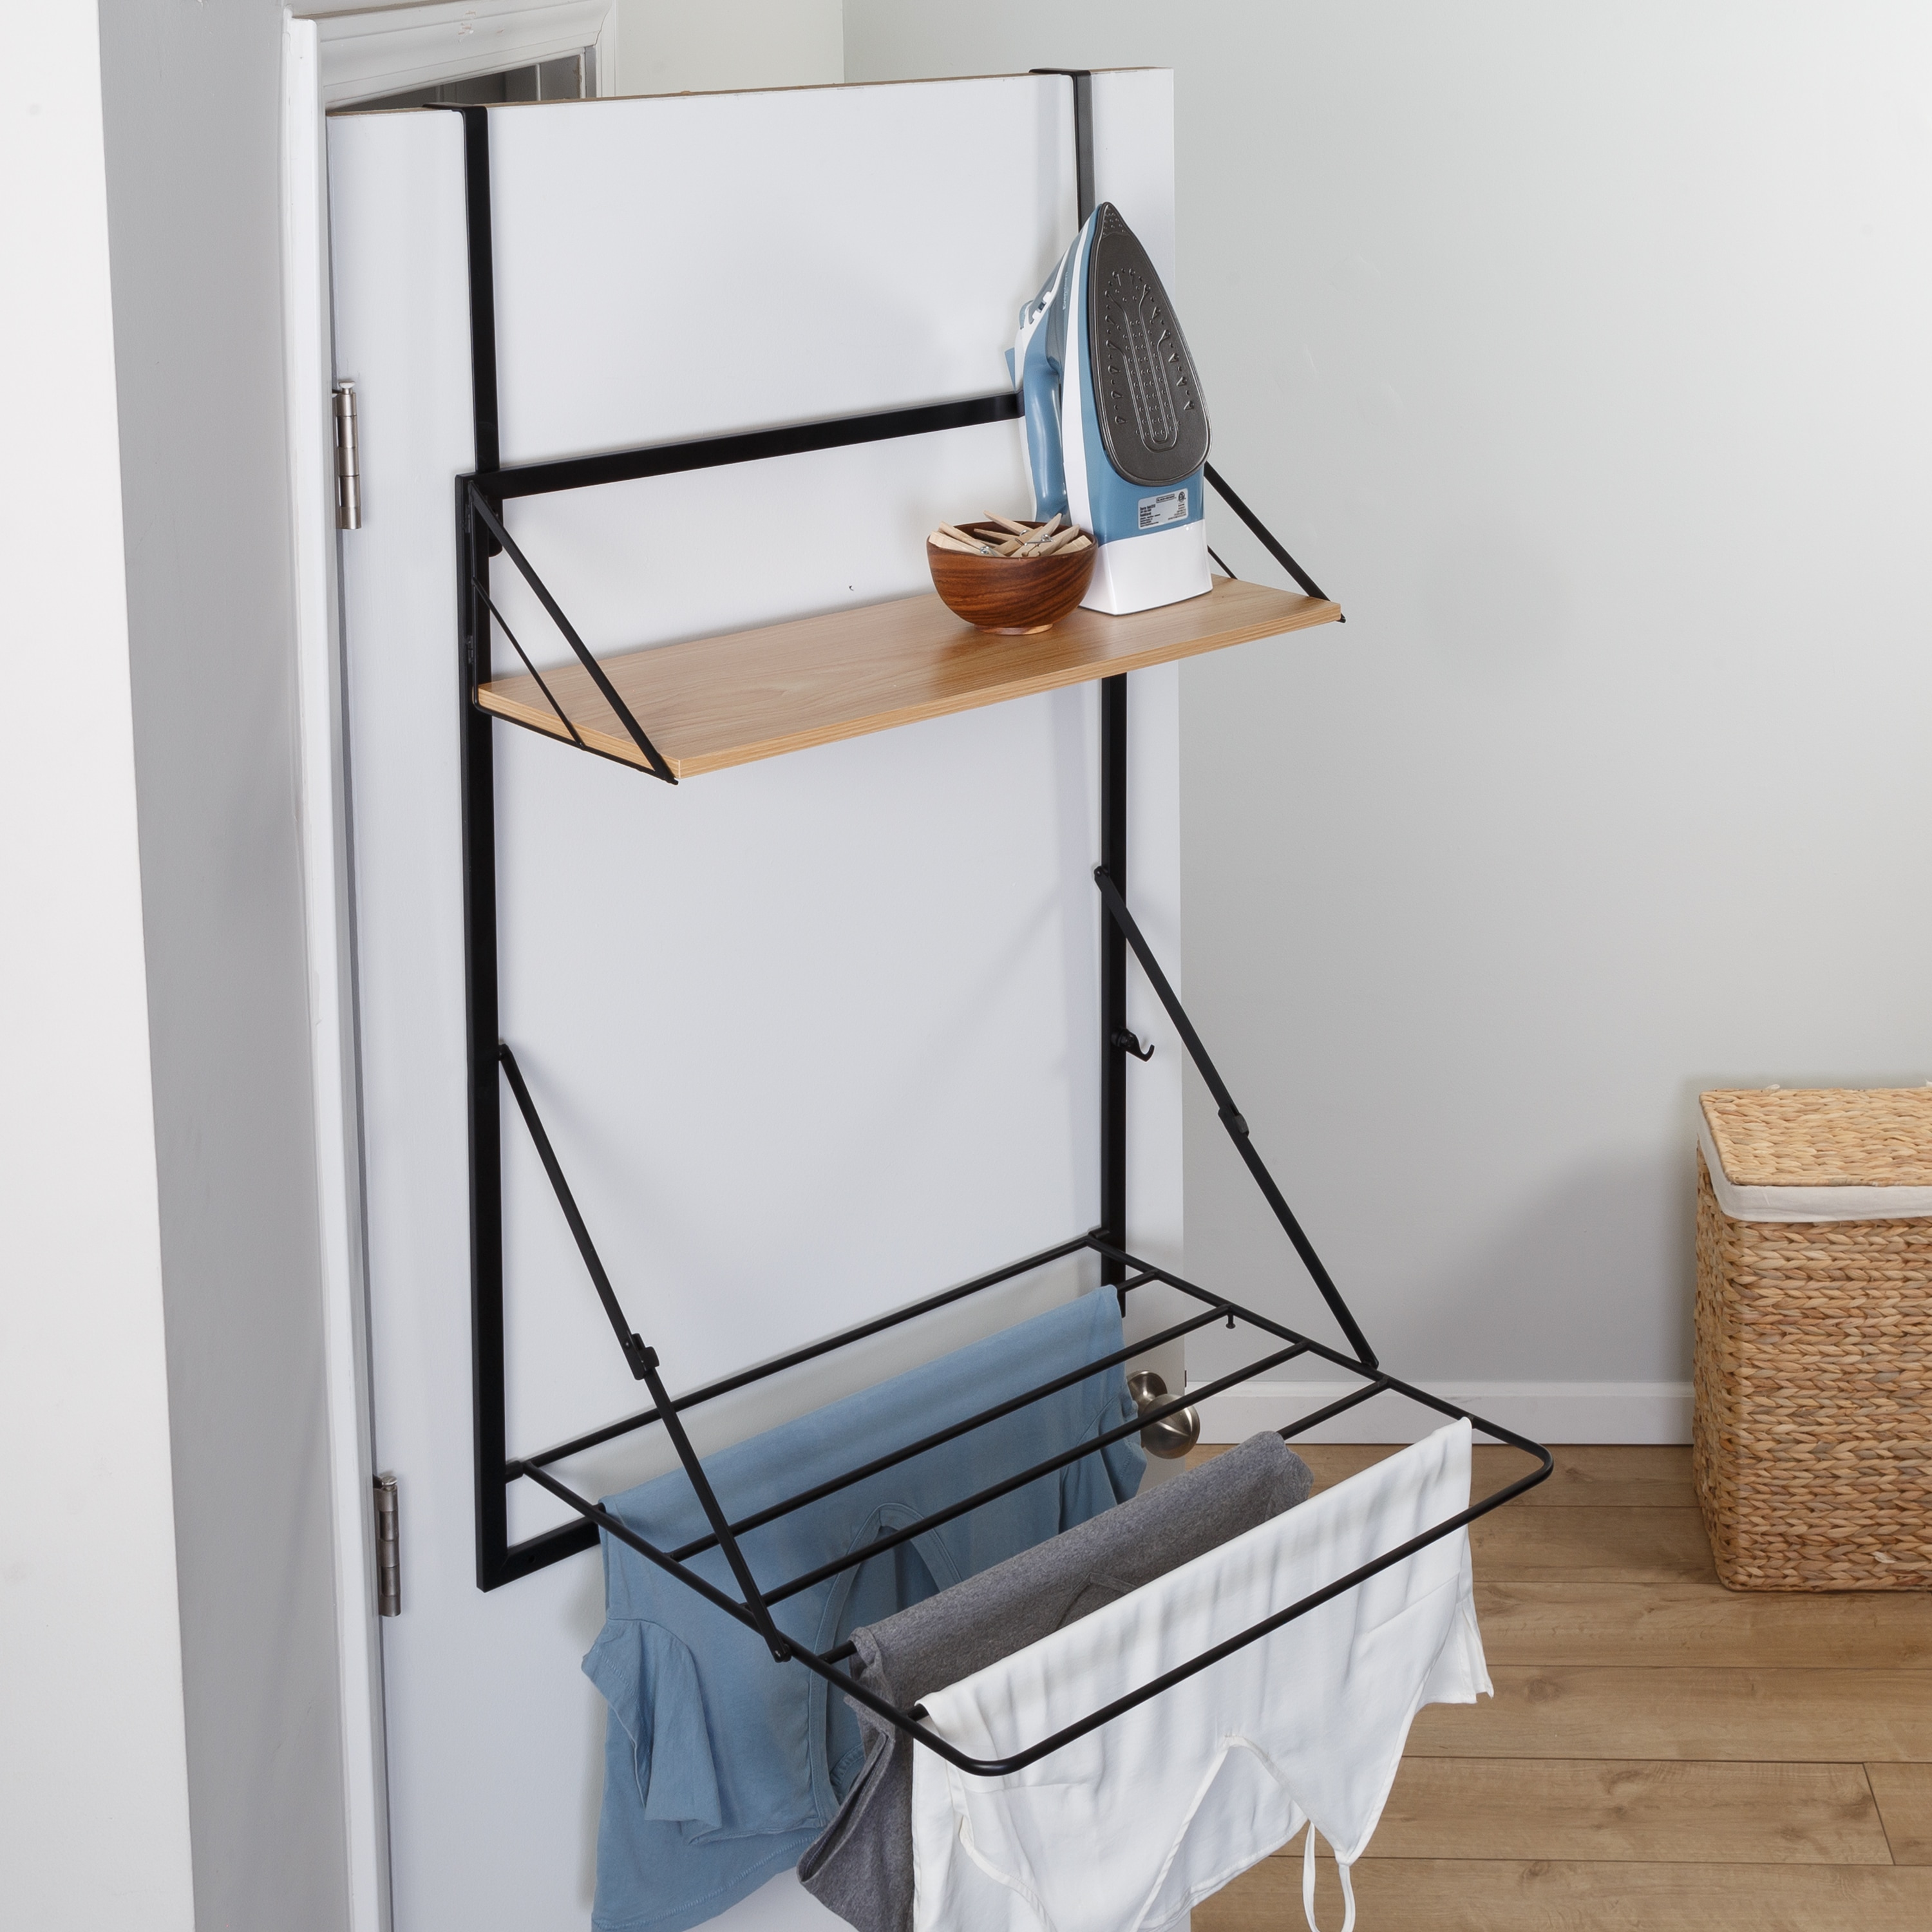  Honey-Can-Do Metal Folding Drying Rack, X-Frame Design : Home &  Kitchen